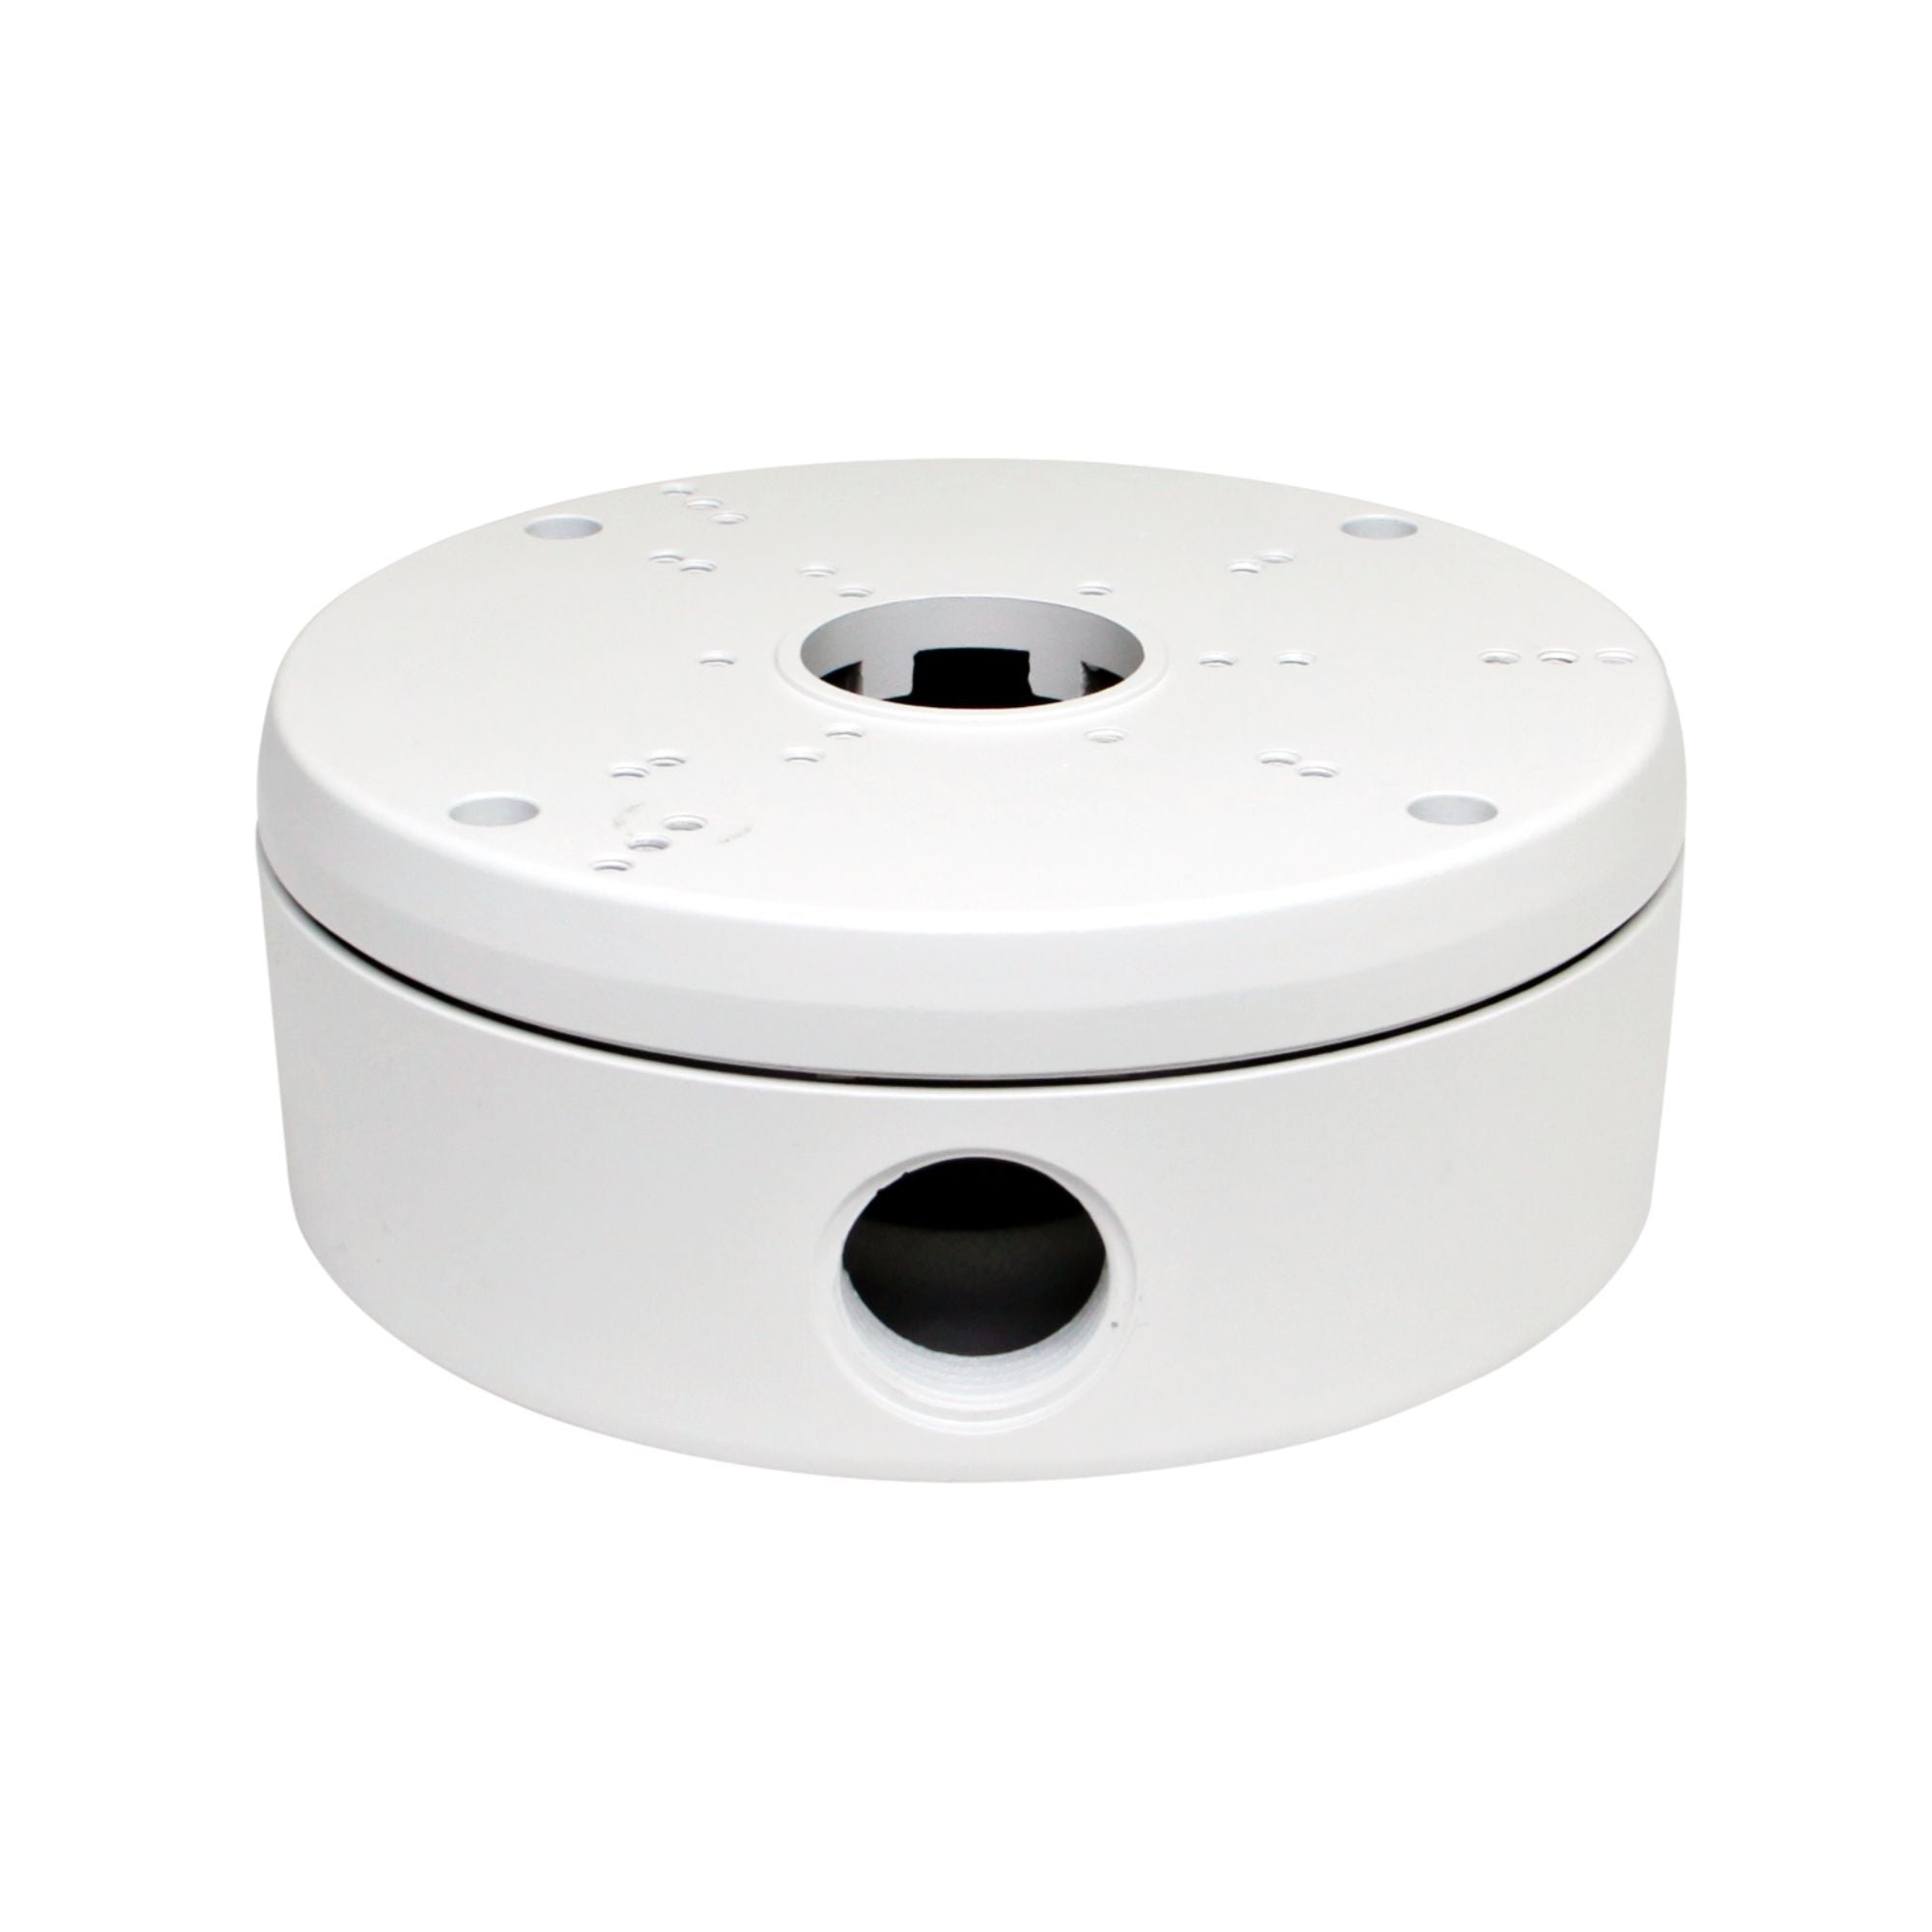 Junction Box for Surveillance CCTV Camera